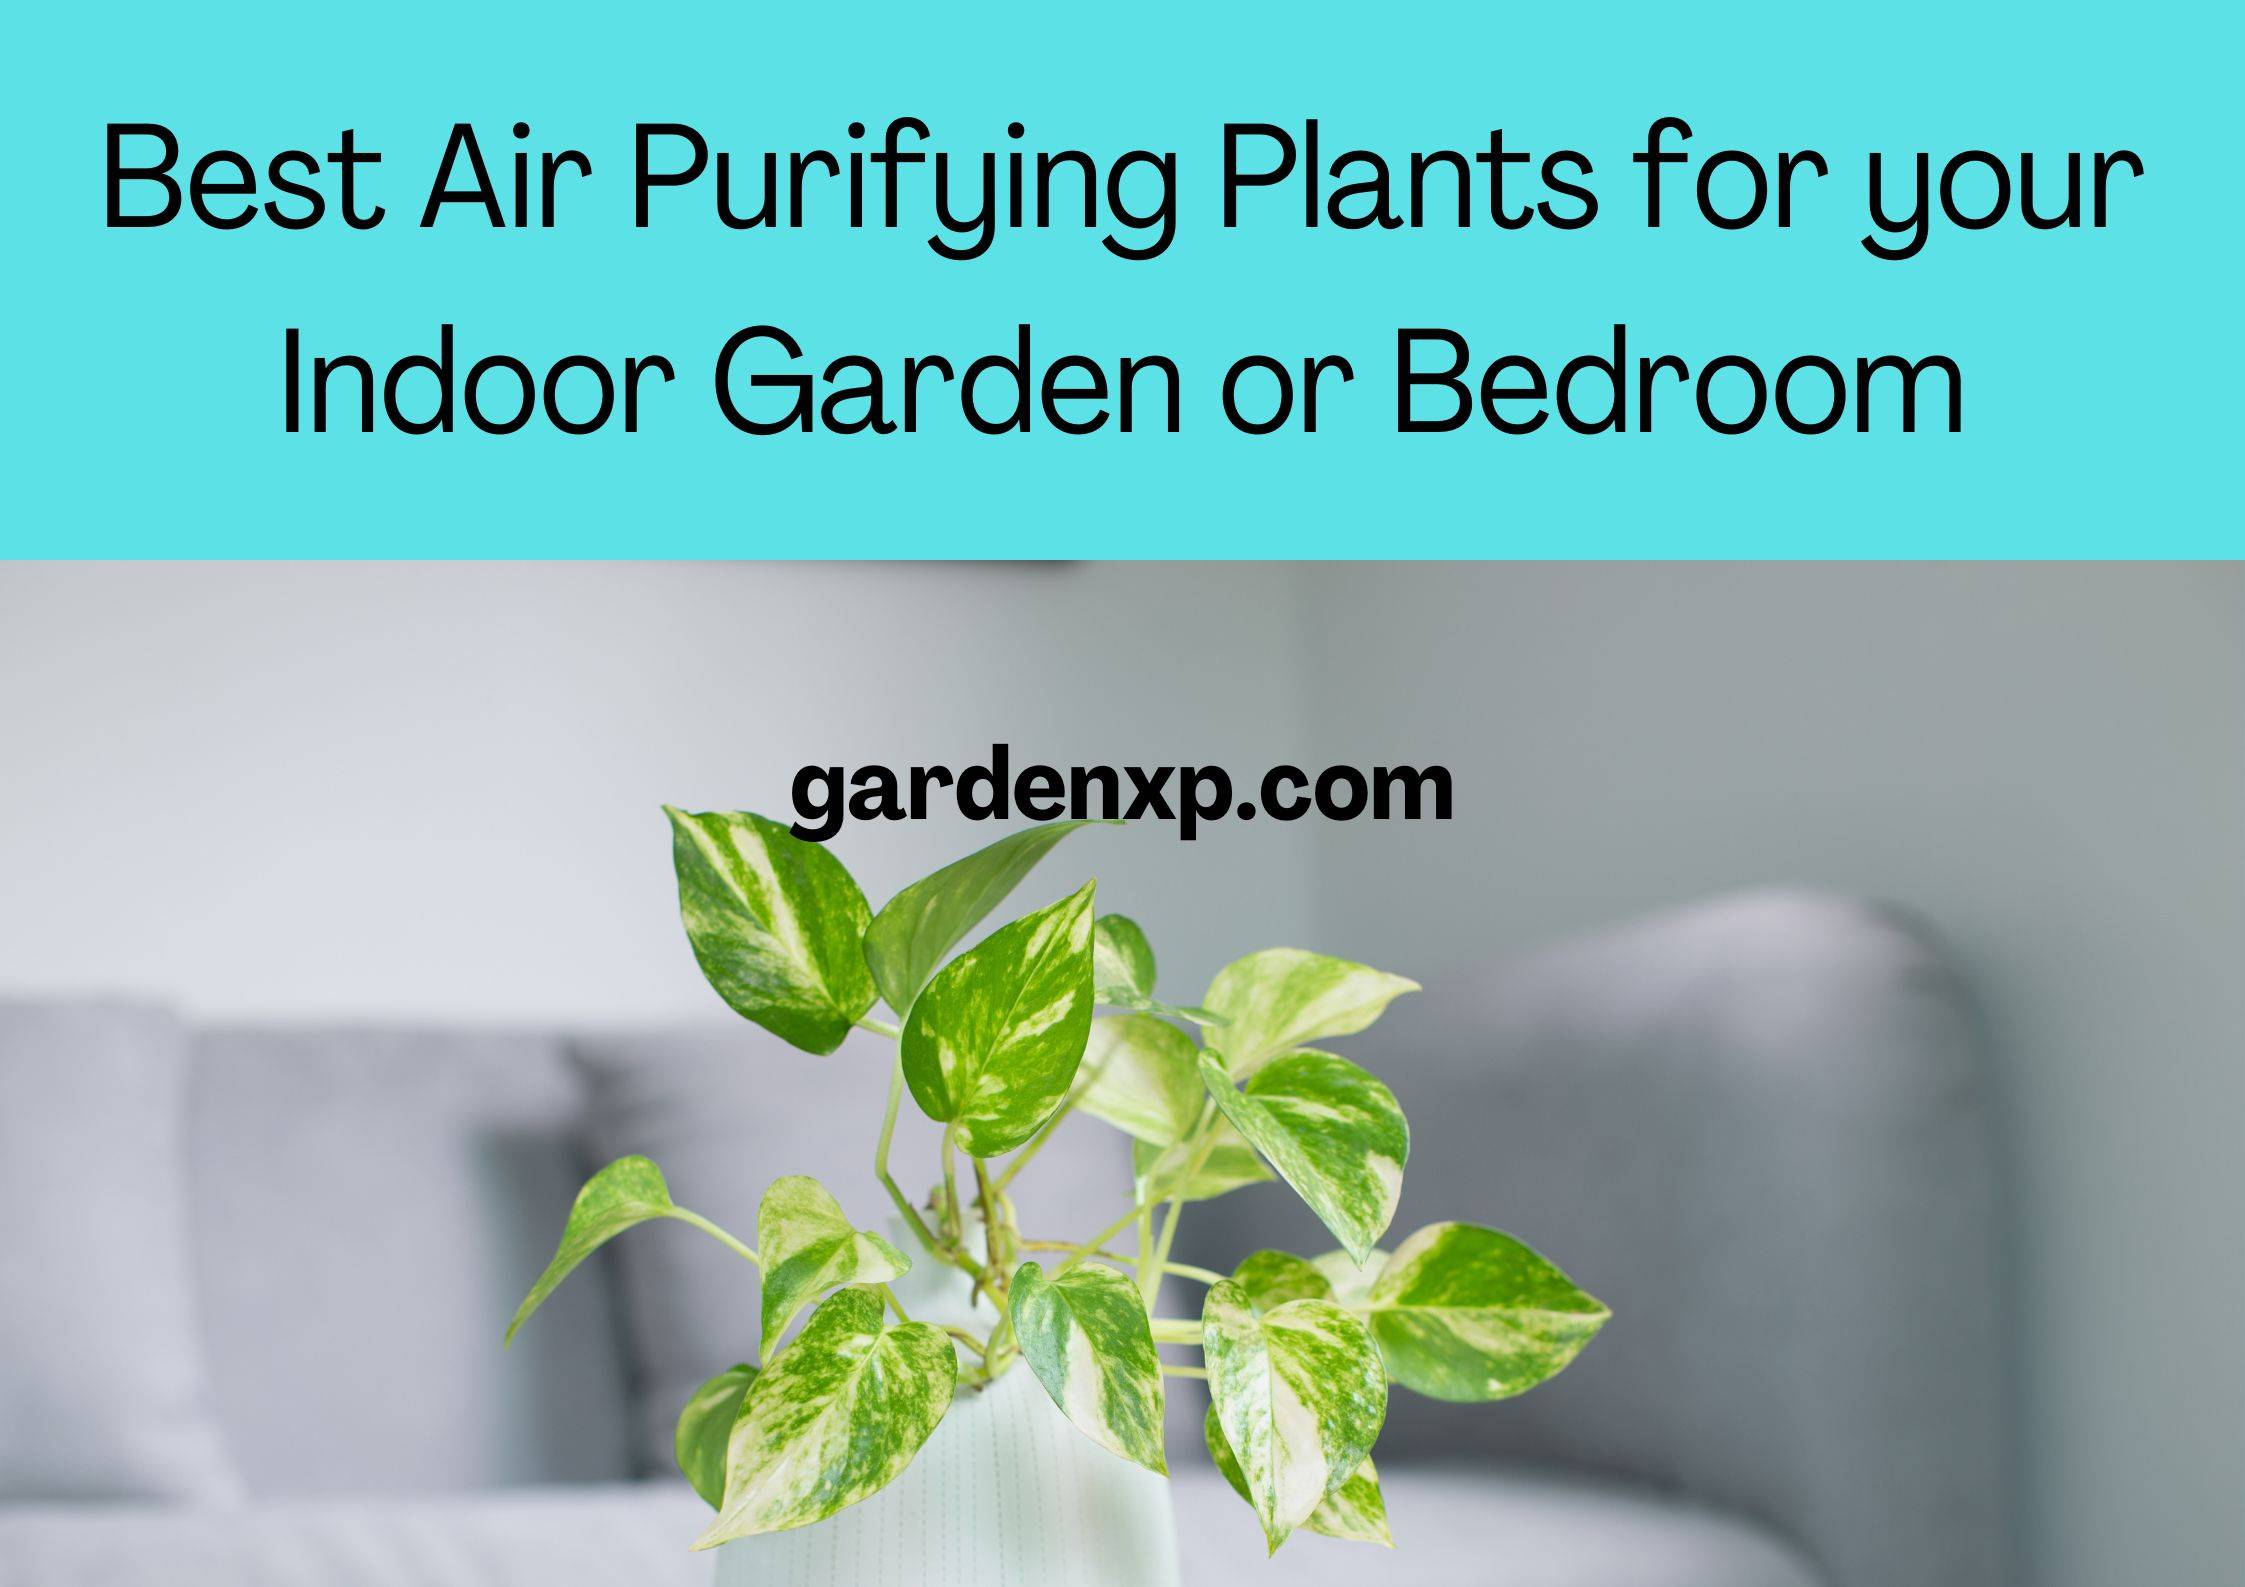 Best Air Purifying Plants for your Indoor Garden or Bedroom